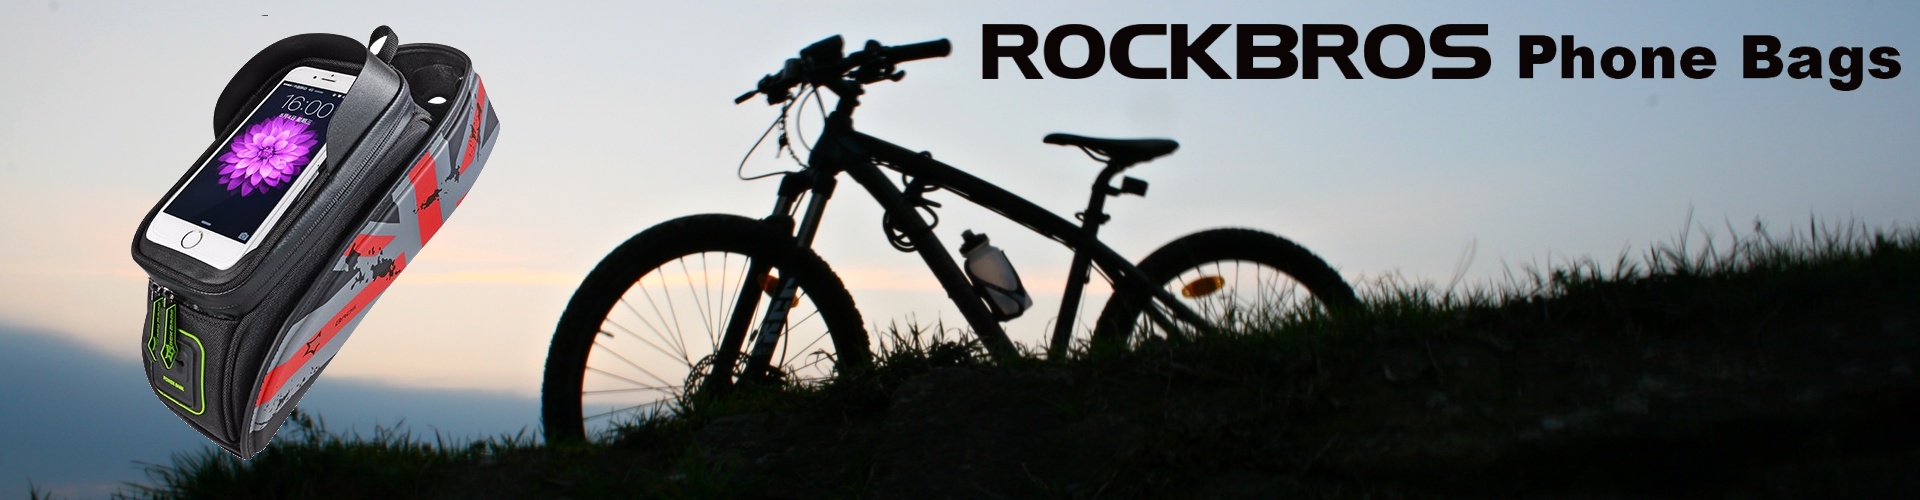 rockbros website